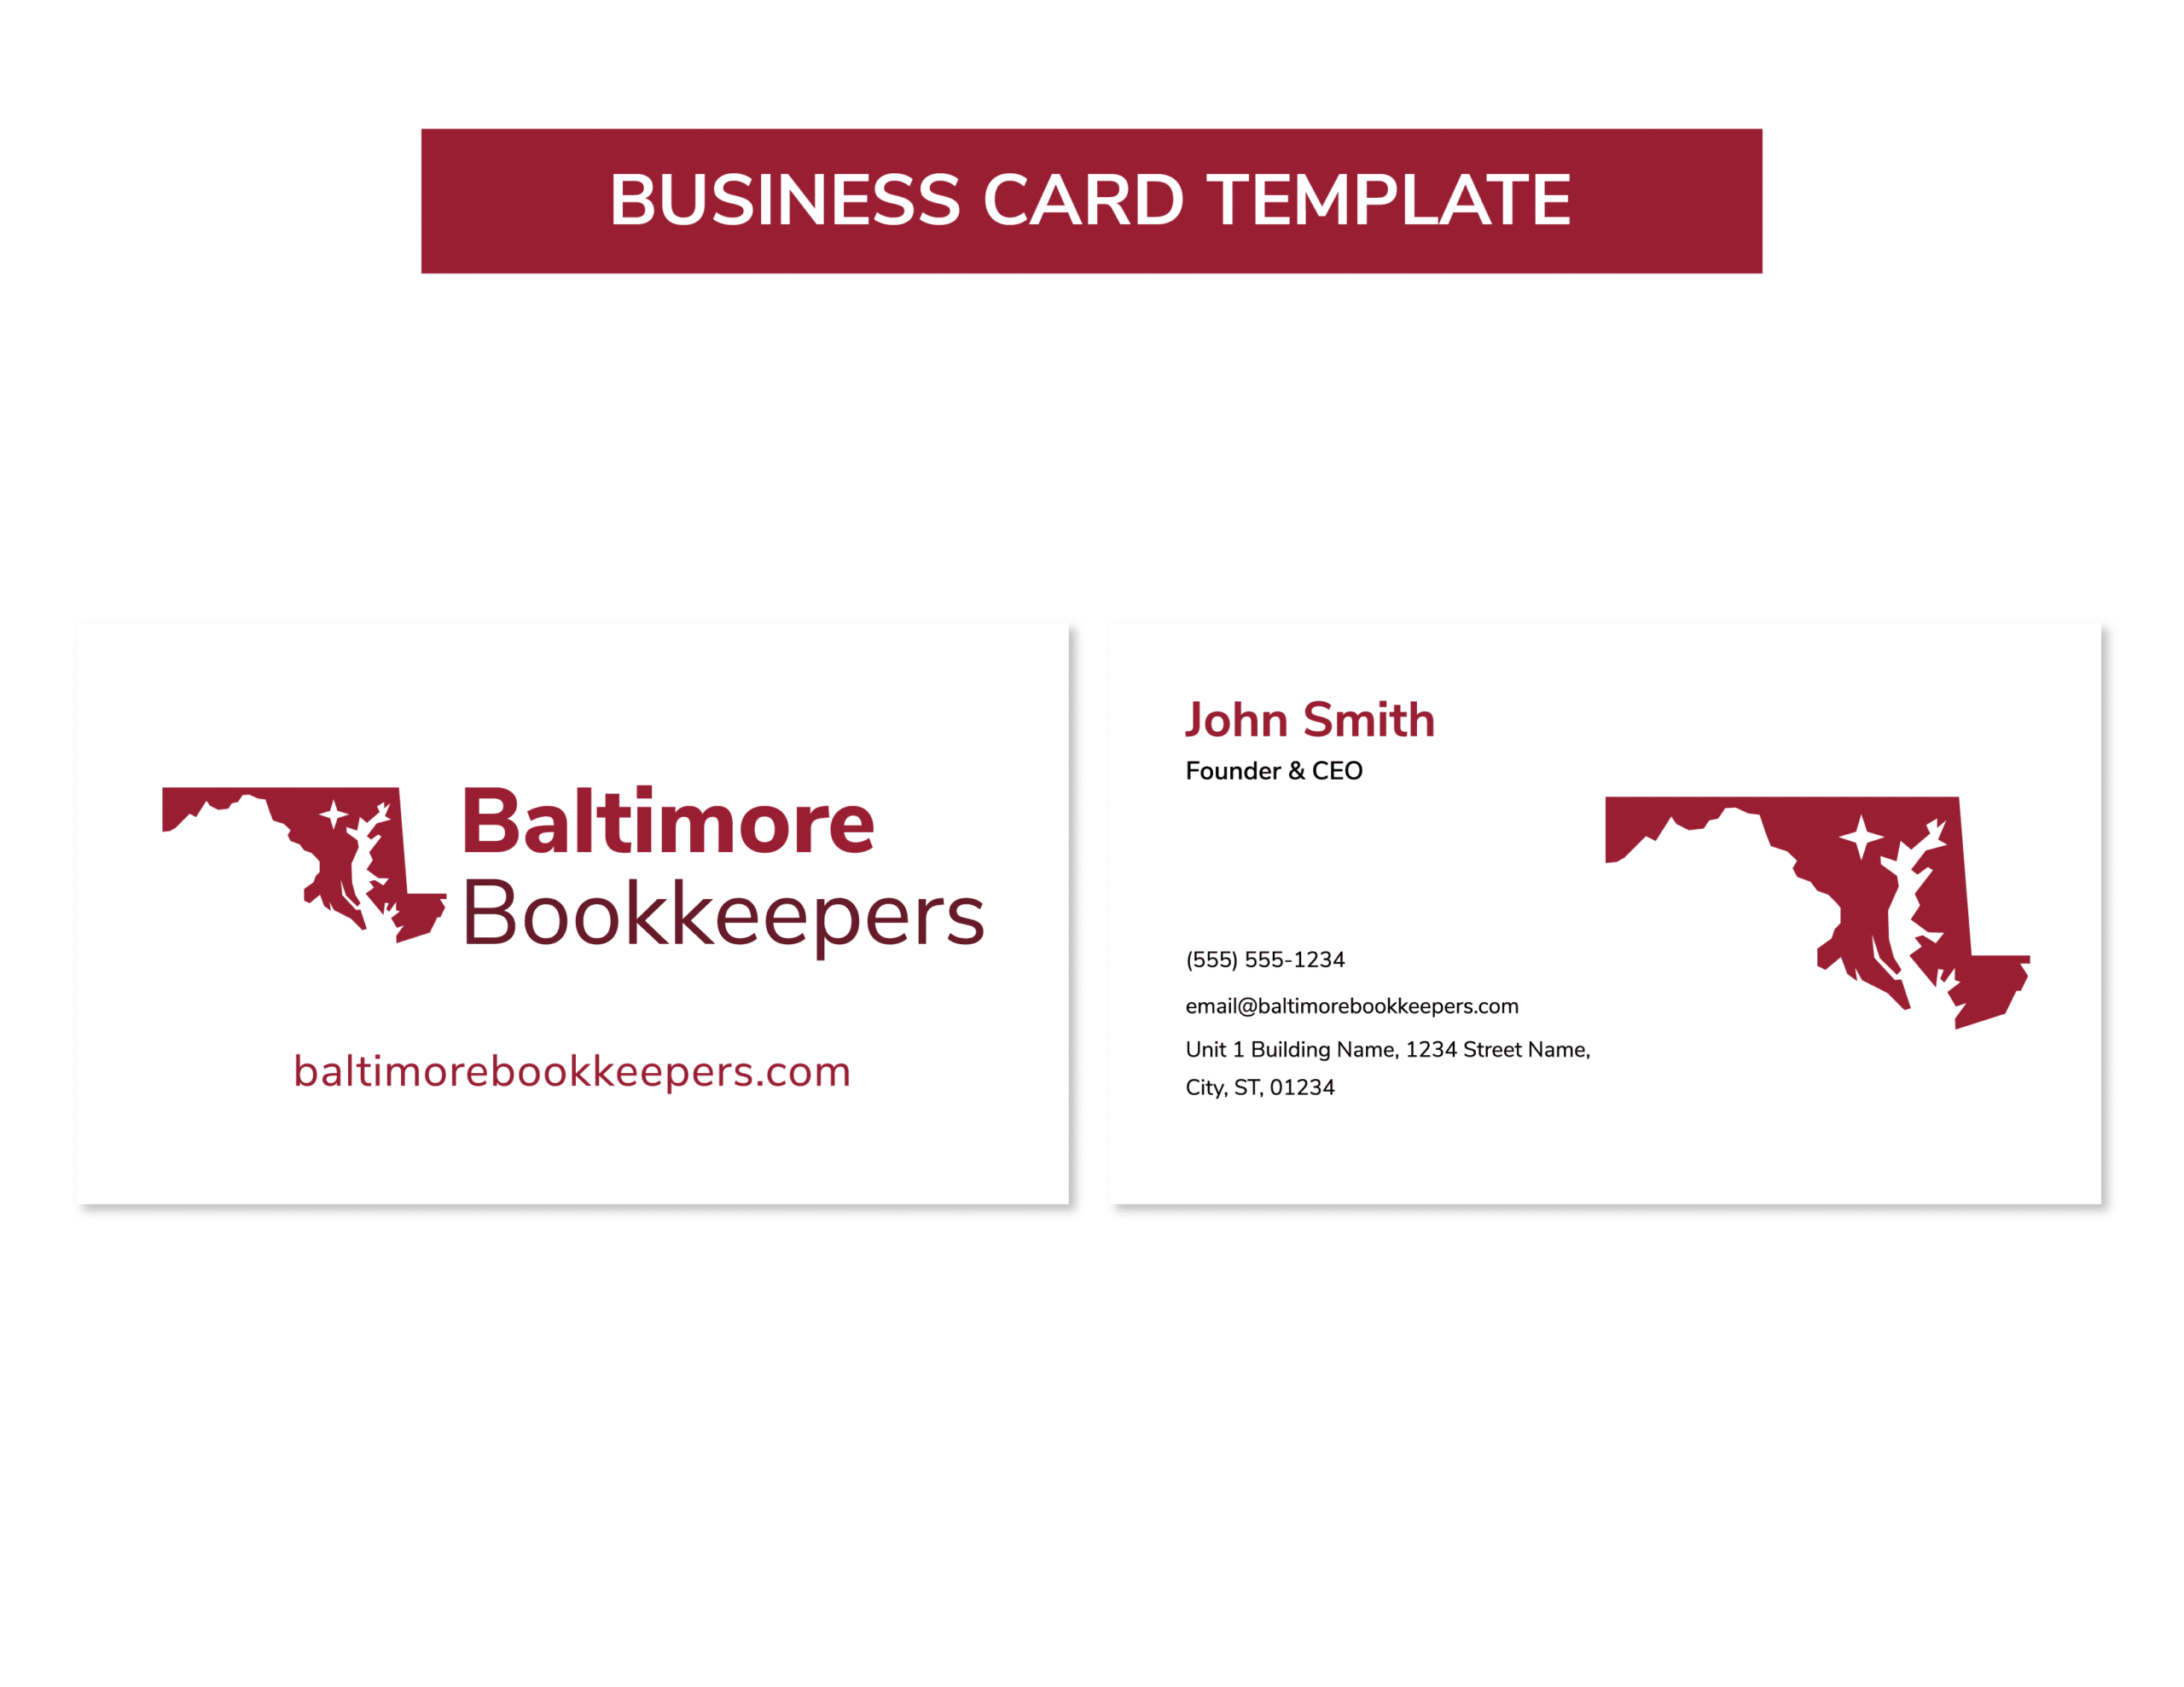 04BaltimoreBK_Showcase_Business Card Template